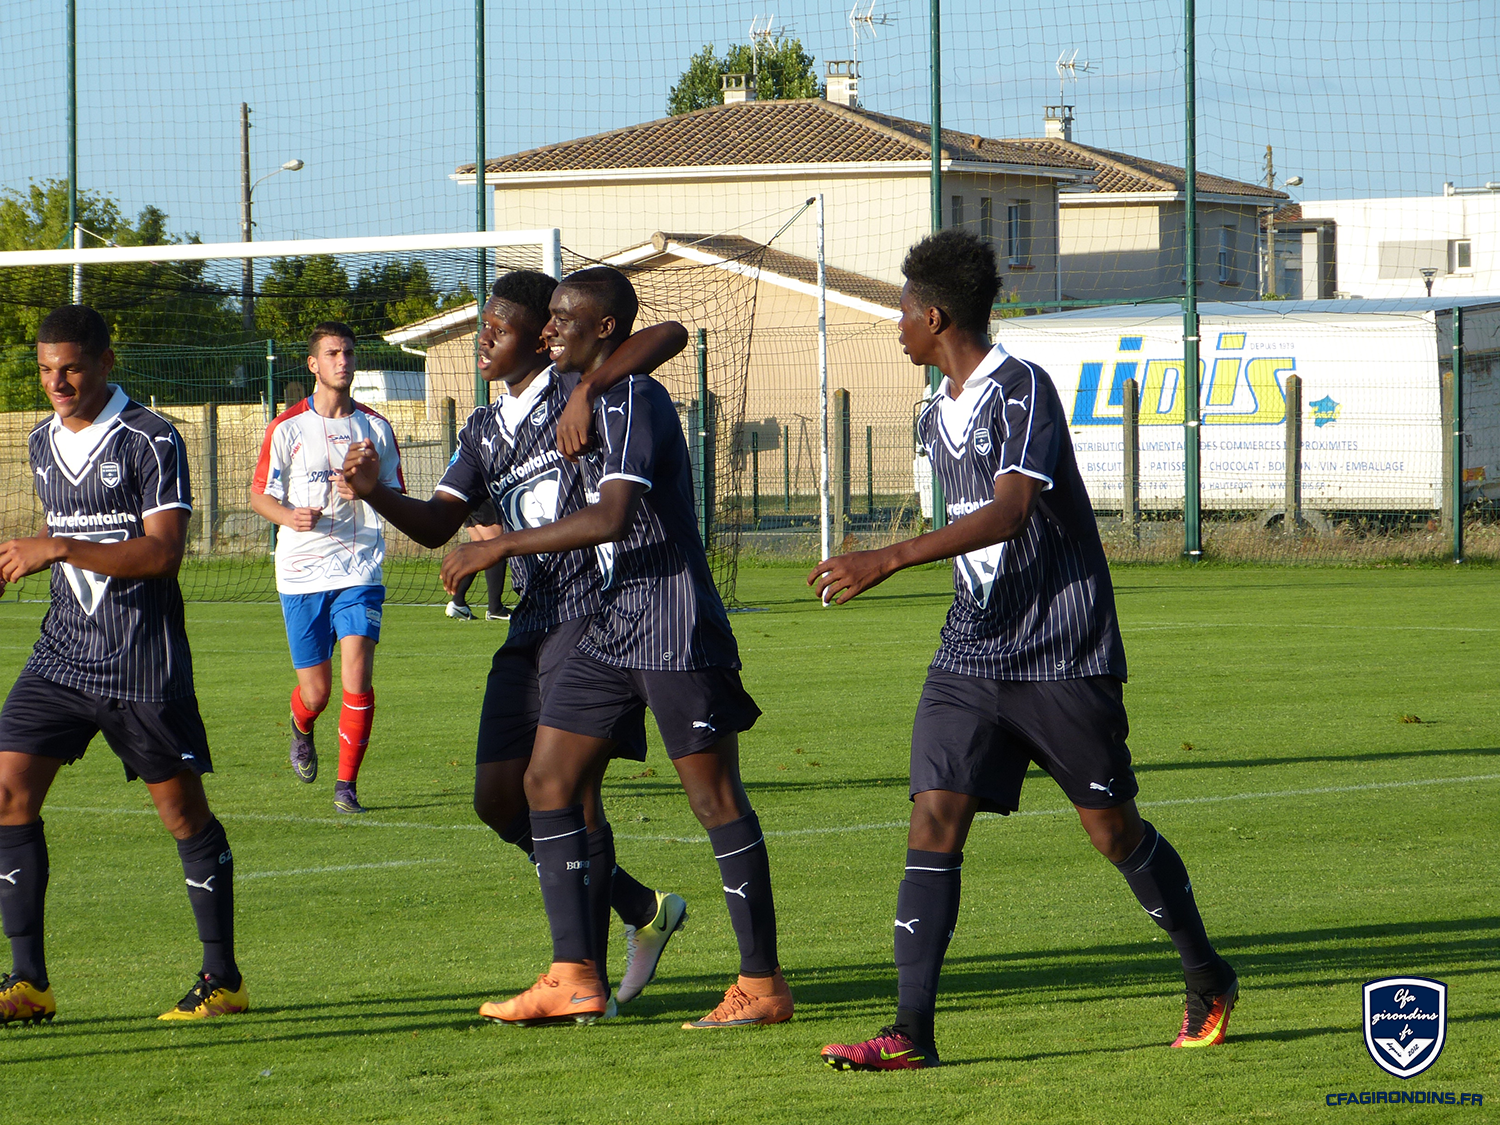 Cfa Girondins : Une belle victoire contre le SA Mérignac en amical - Formation Girondins 